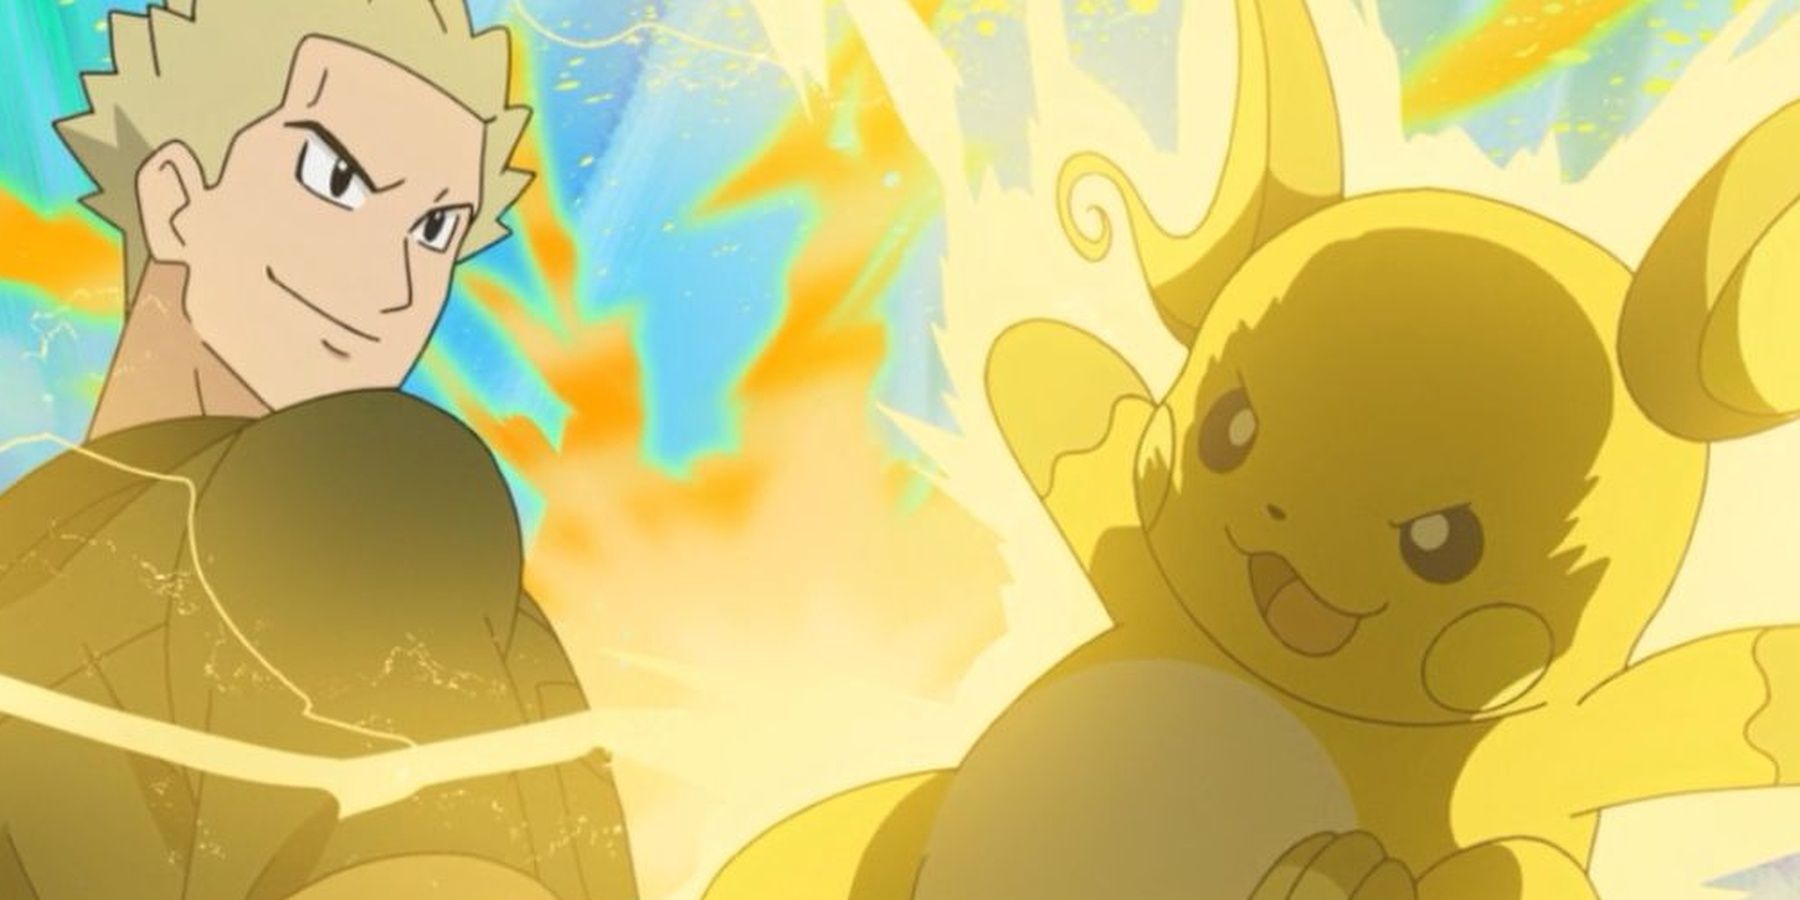 Lt Surge stands alongside Raichu in the Pokemon anime